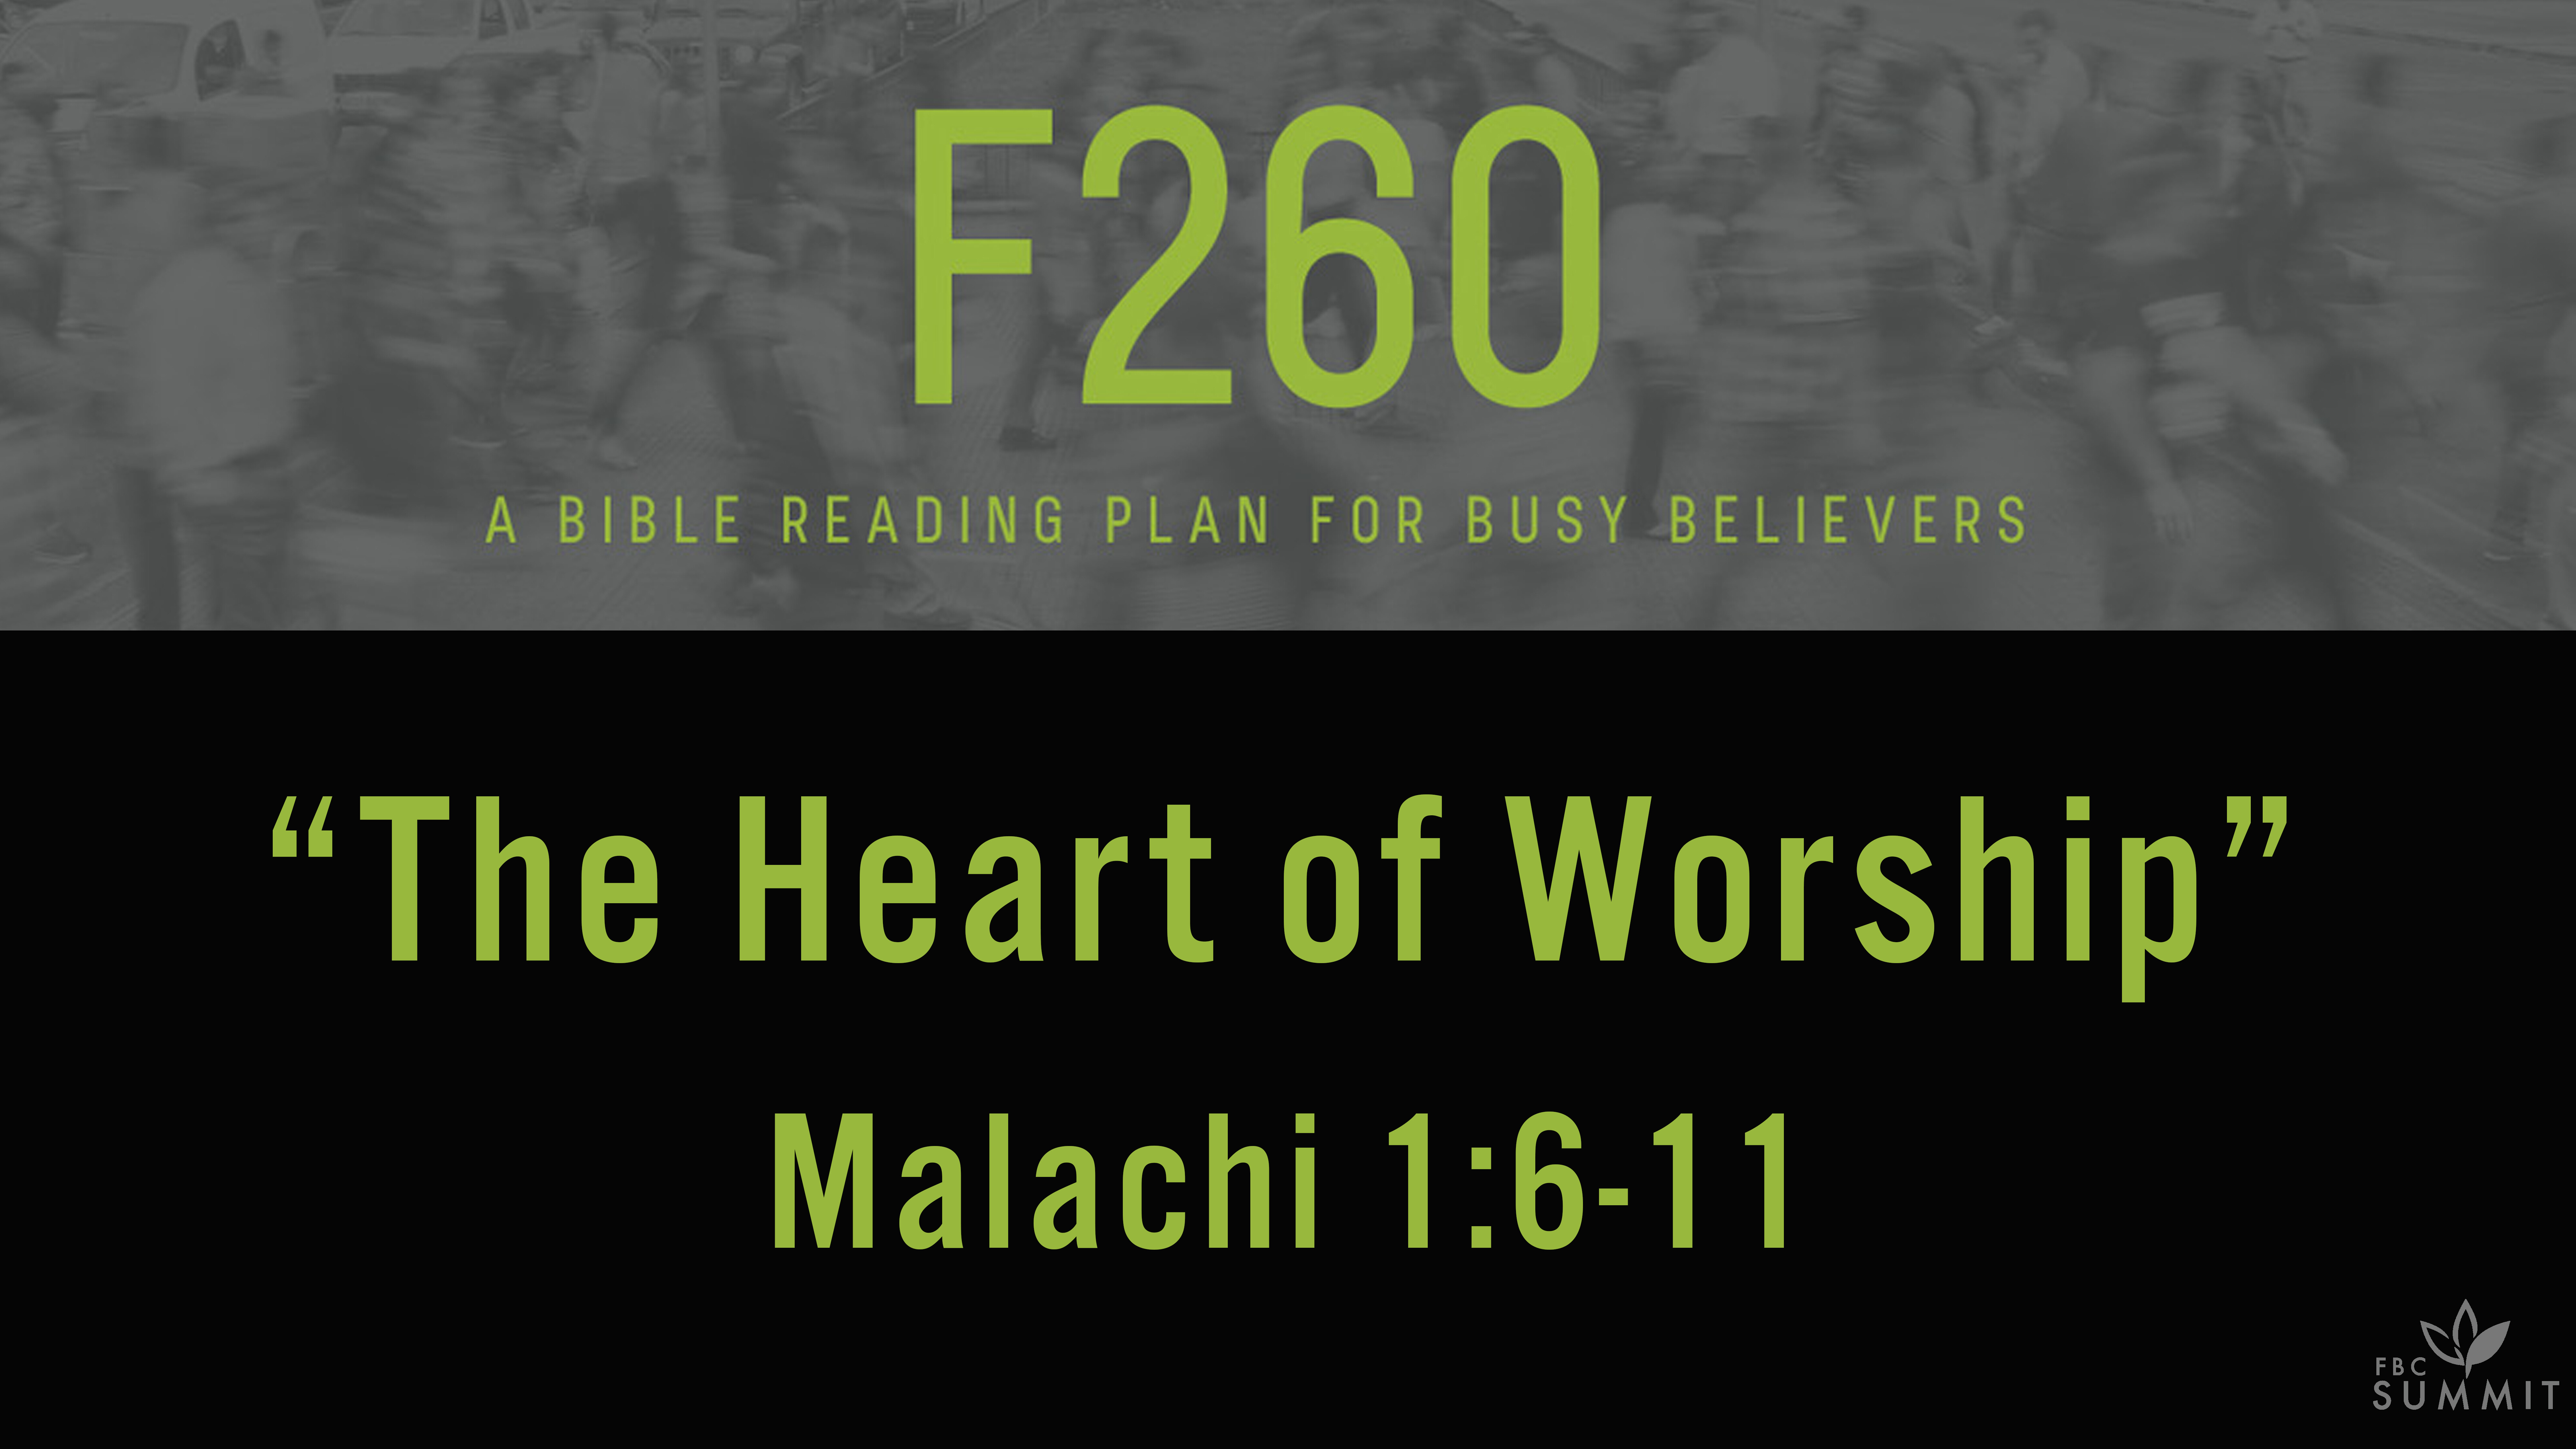 F260: "The Heart of Worship" Malachi 1:6-11